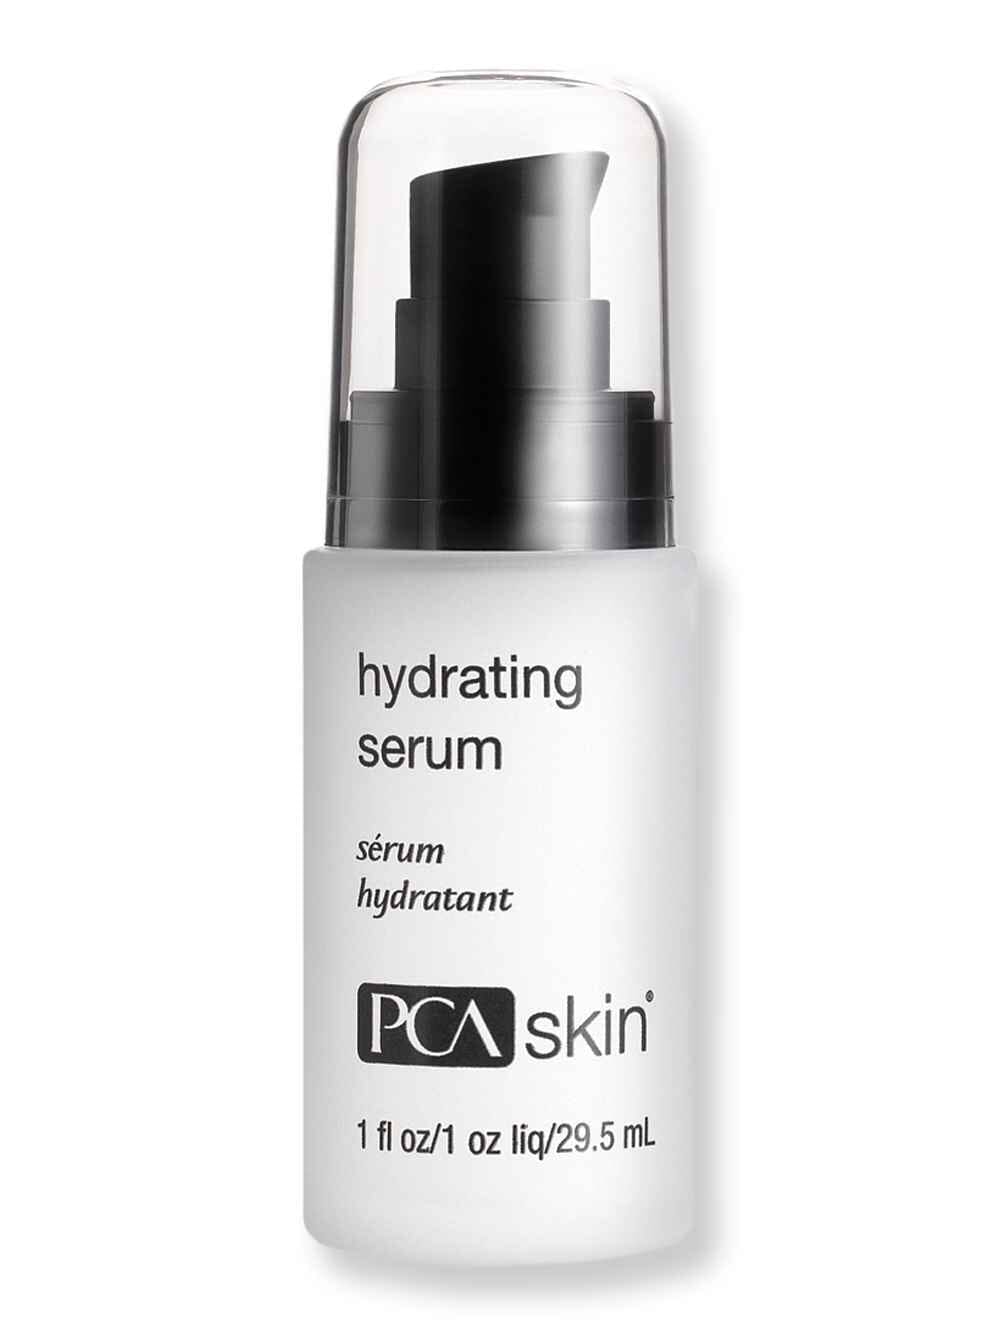 PCA Skin PCA Skin Hydrating Serum 1 oz30 ml Serums 